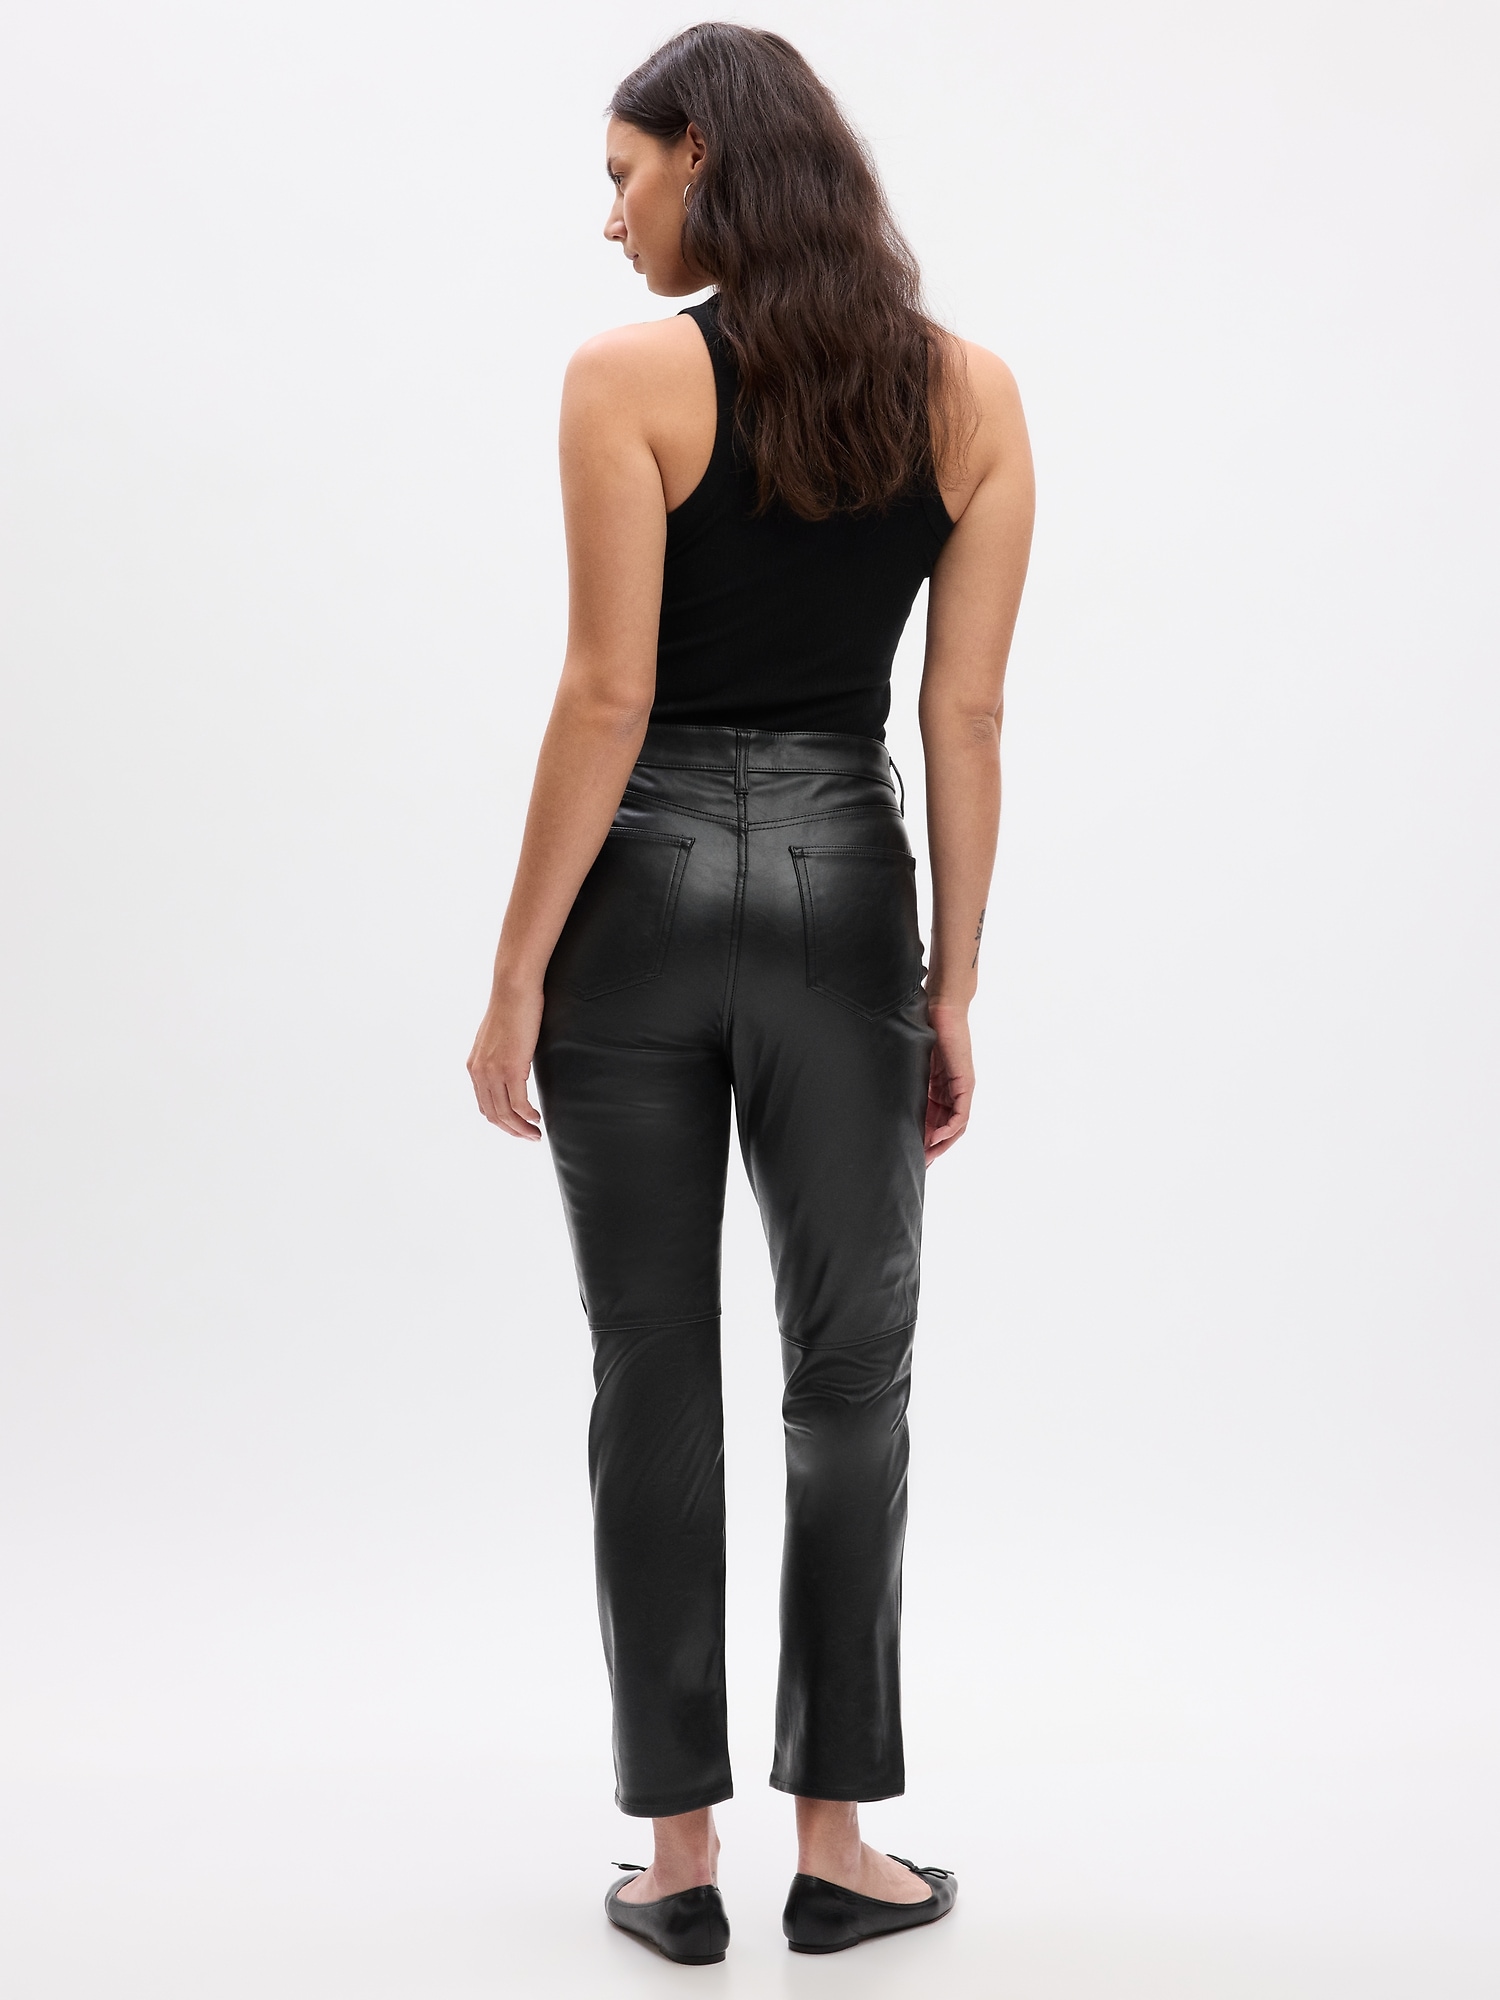 GAP, Pants, Brand New Gap Leather Pants Waist 3 Length 30